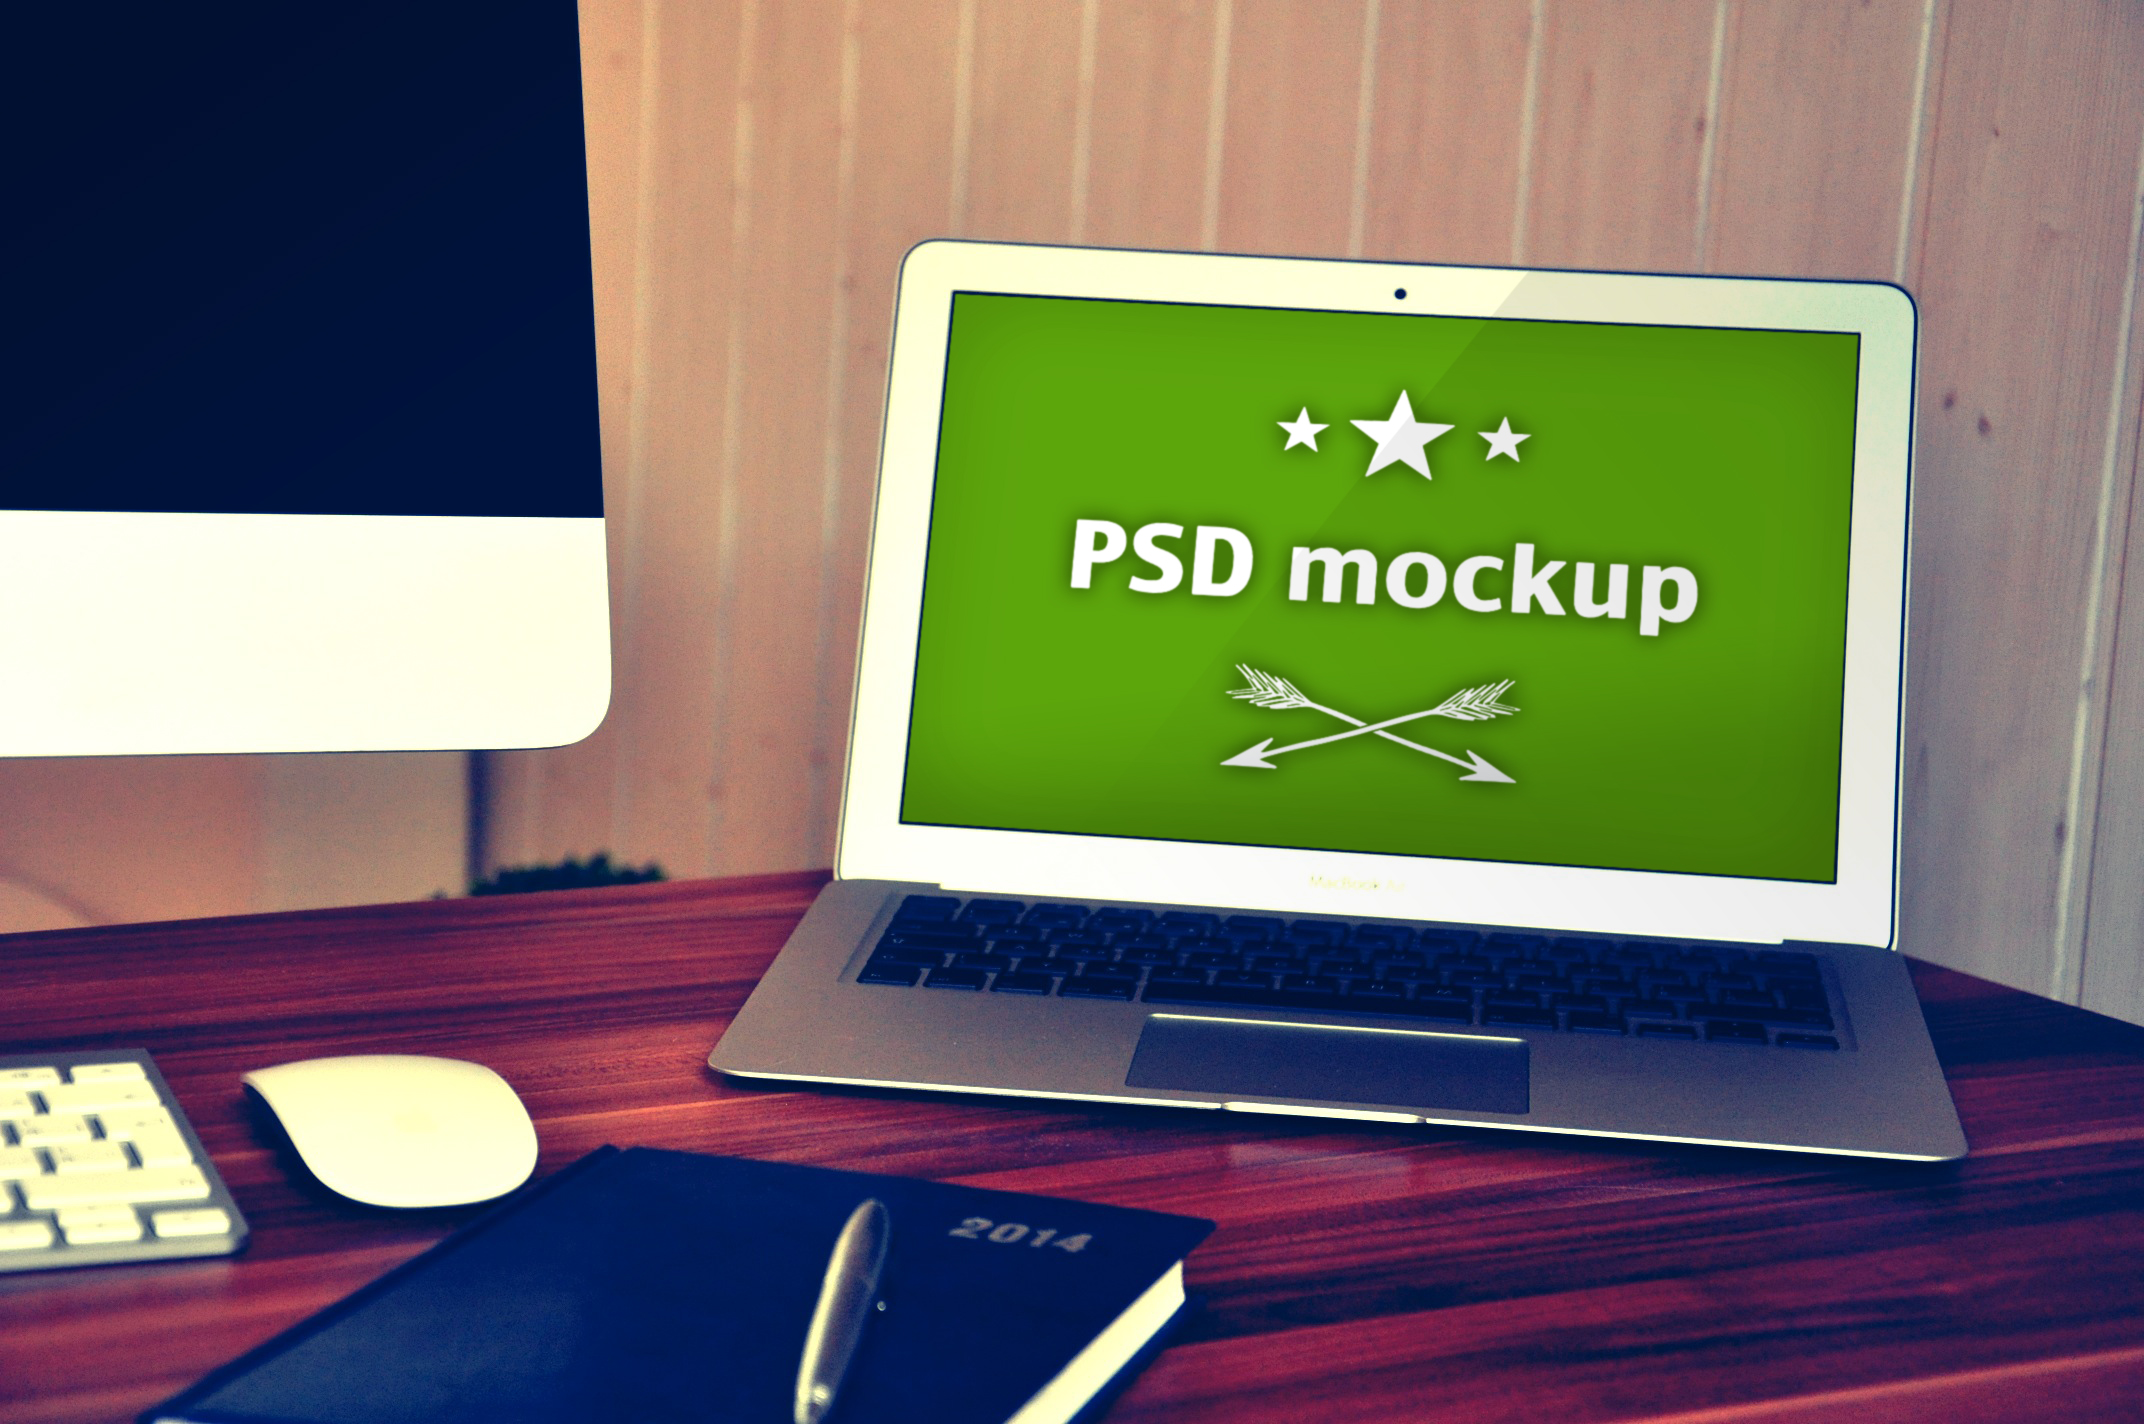 Download Psd Mockup - Macbook air #1 ~ Product Mockups on Creative ... PSD Mockup Templates